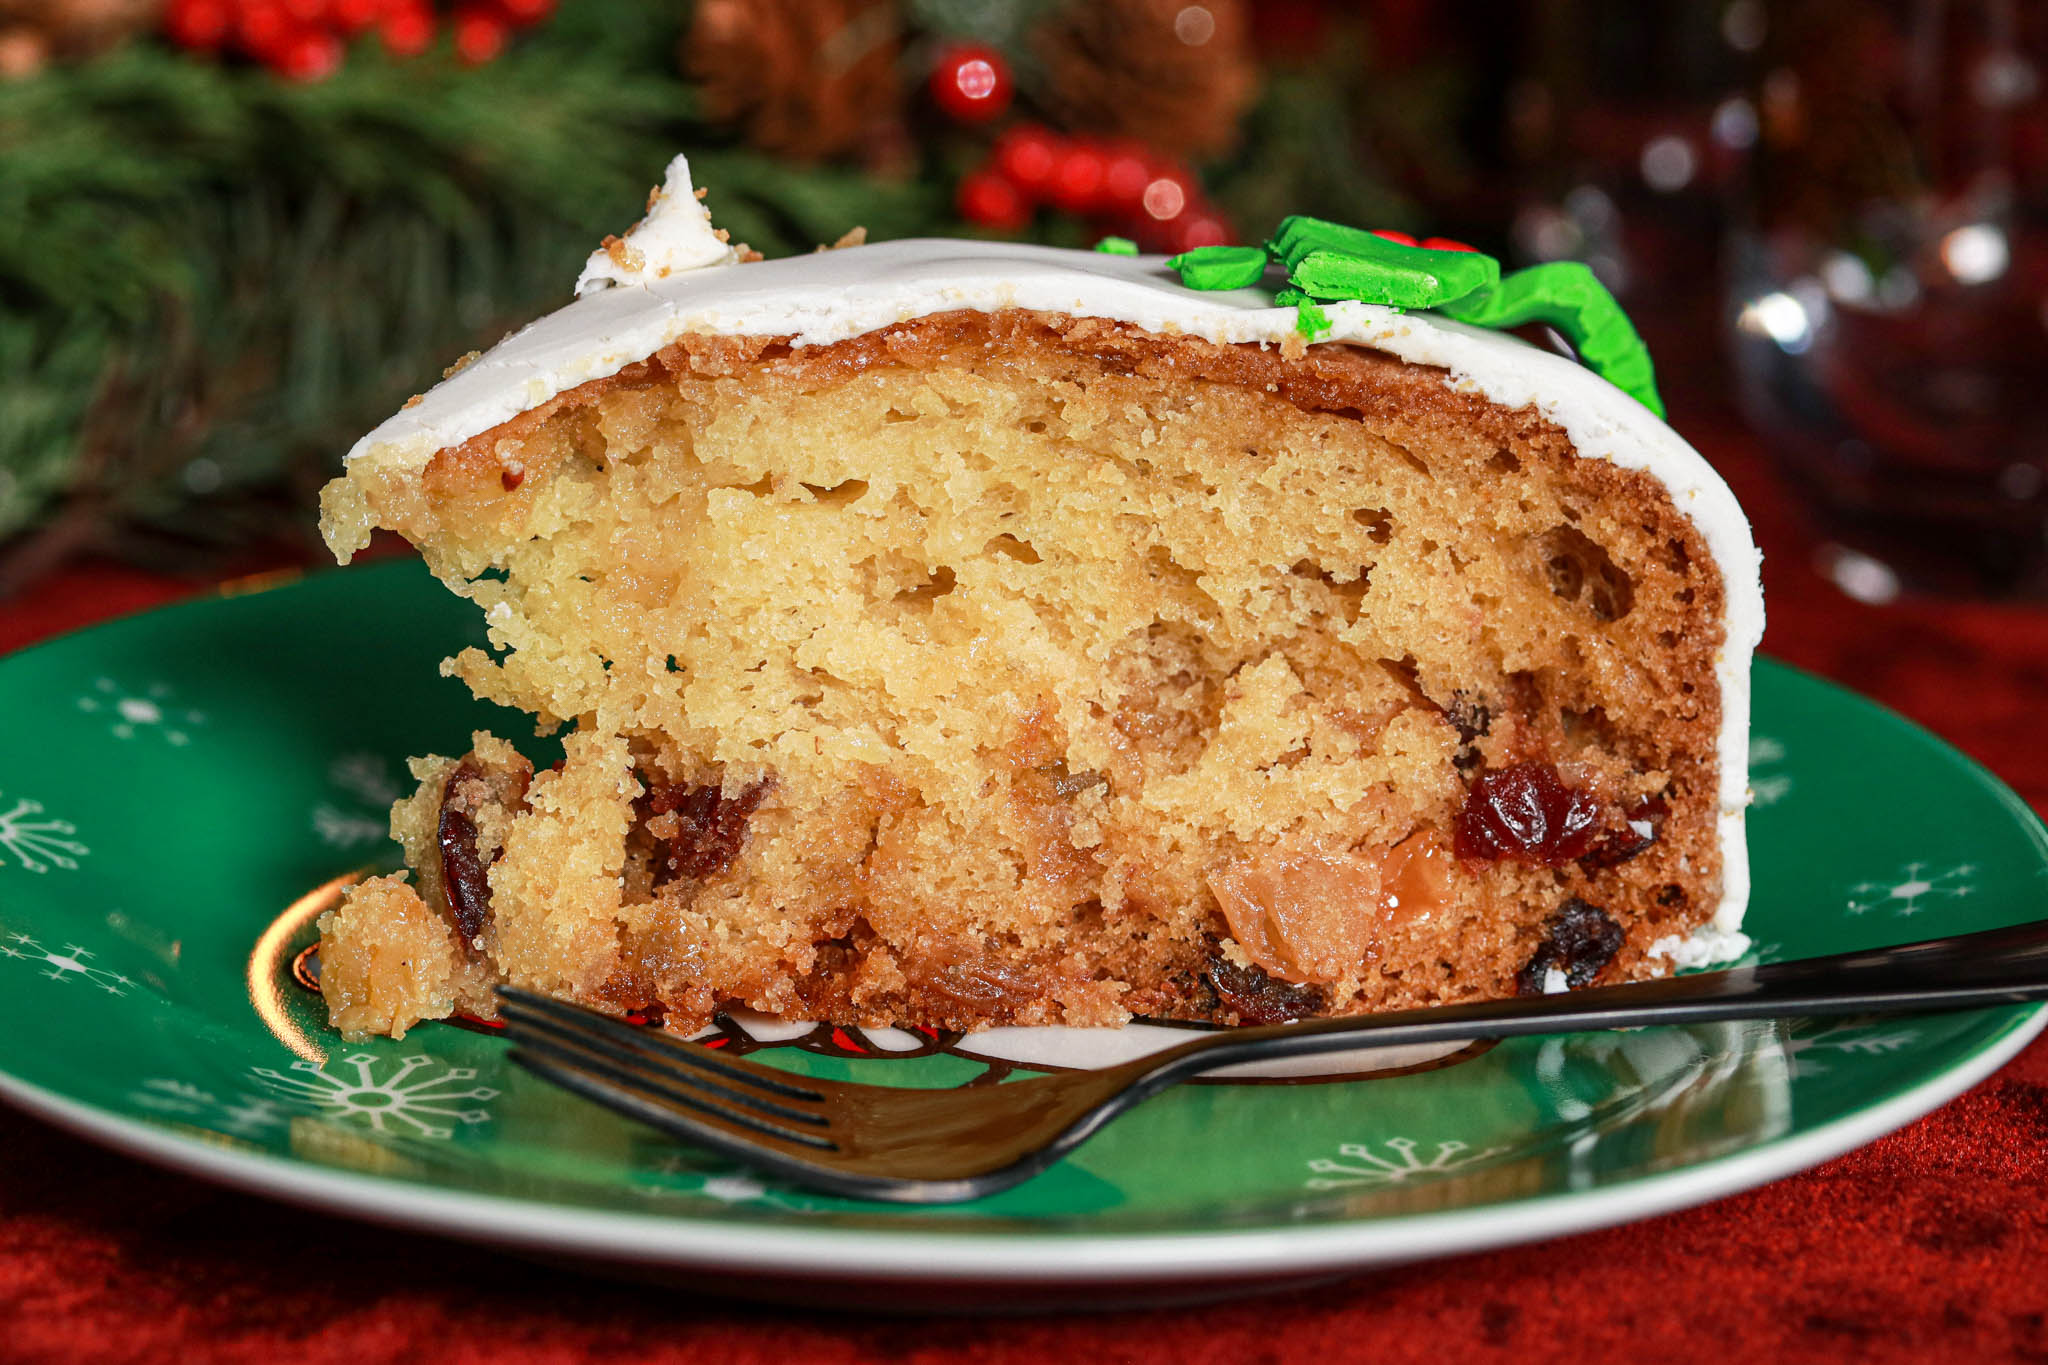 Festive Christmas gluten free slice of cake on green plate, red velvet tablecloth, baubles decorating 